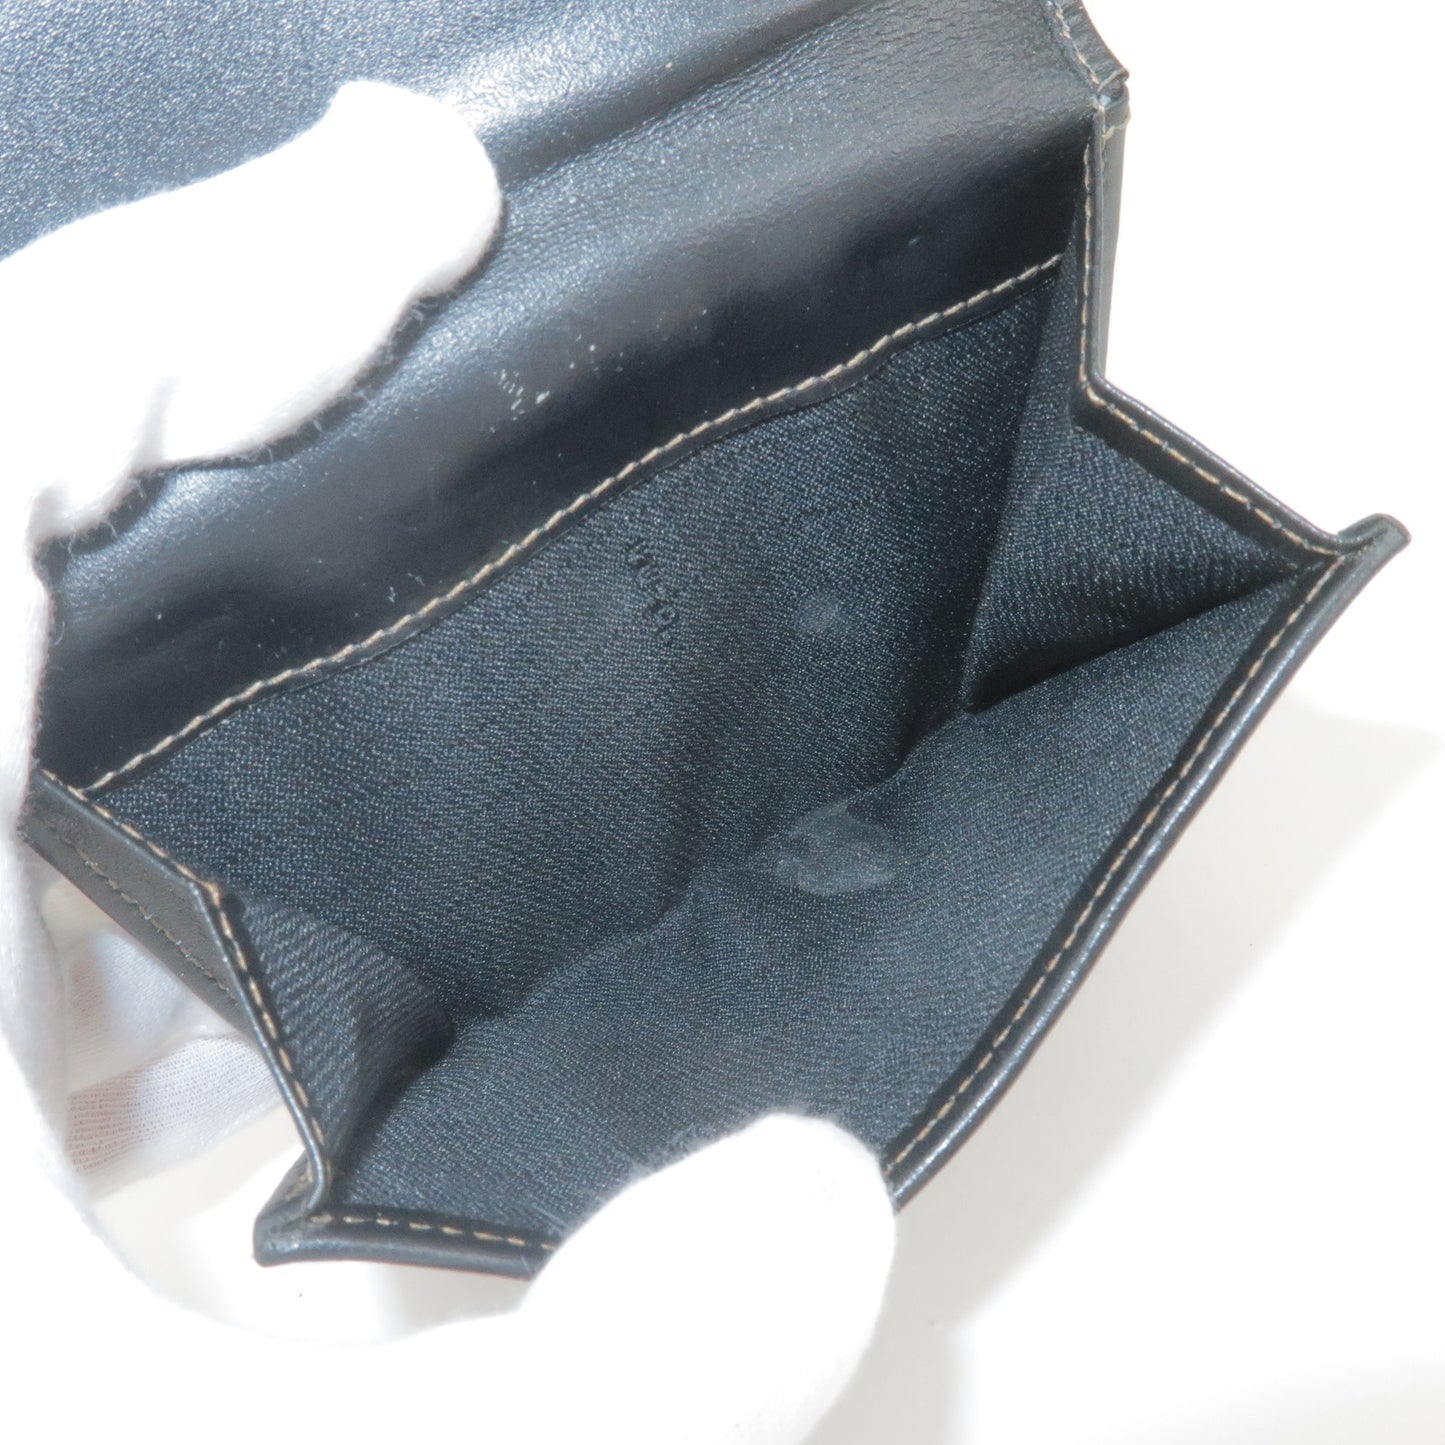 FENDI Pequin PVC Leather Double Snap Wallet Khaki Black 01695